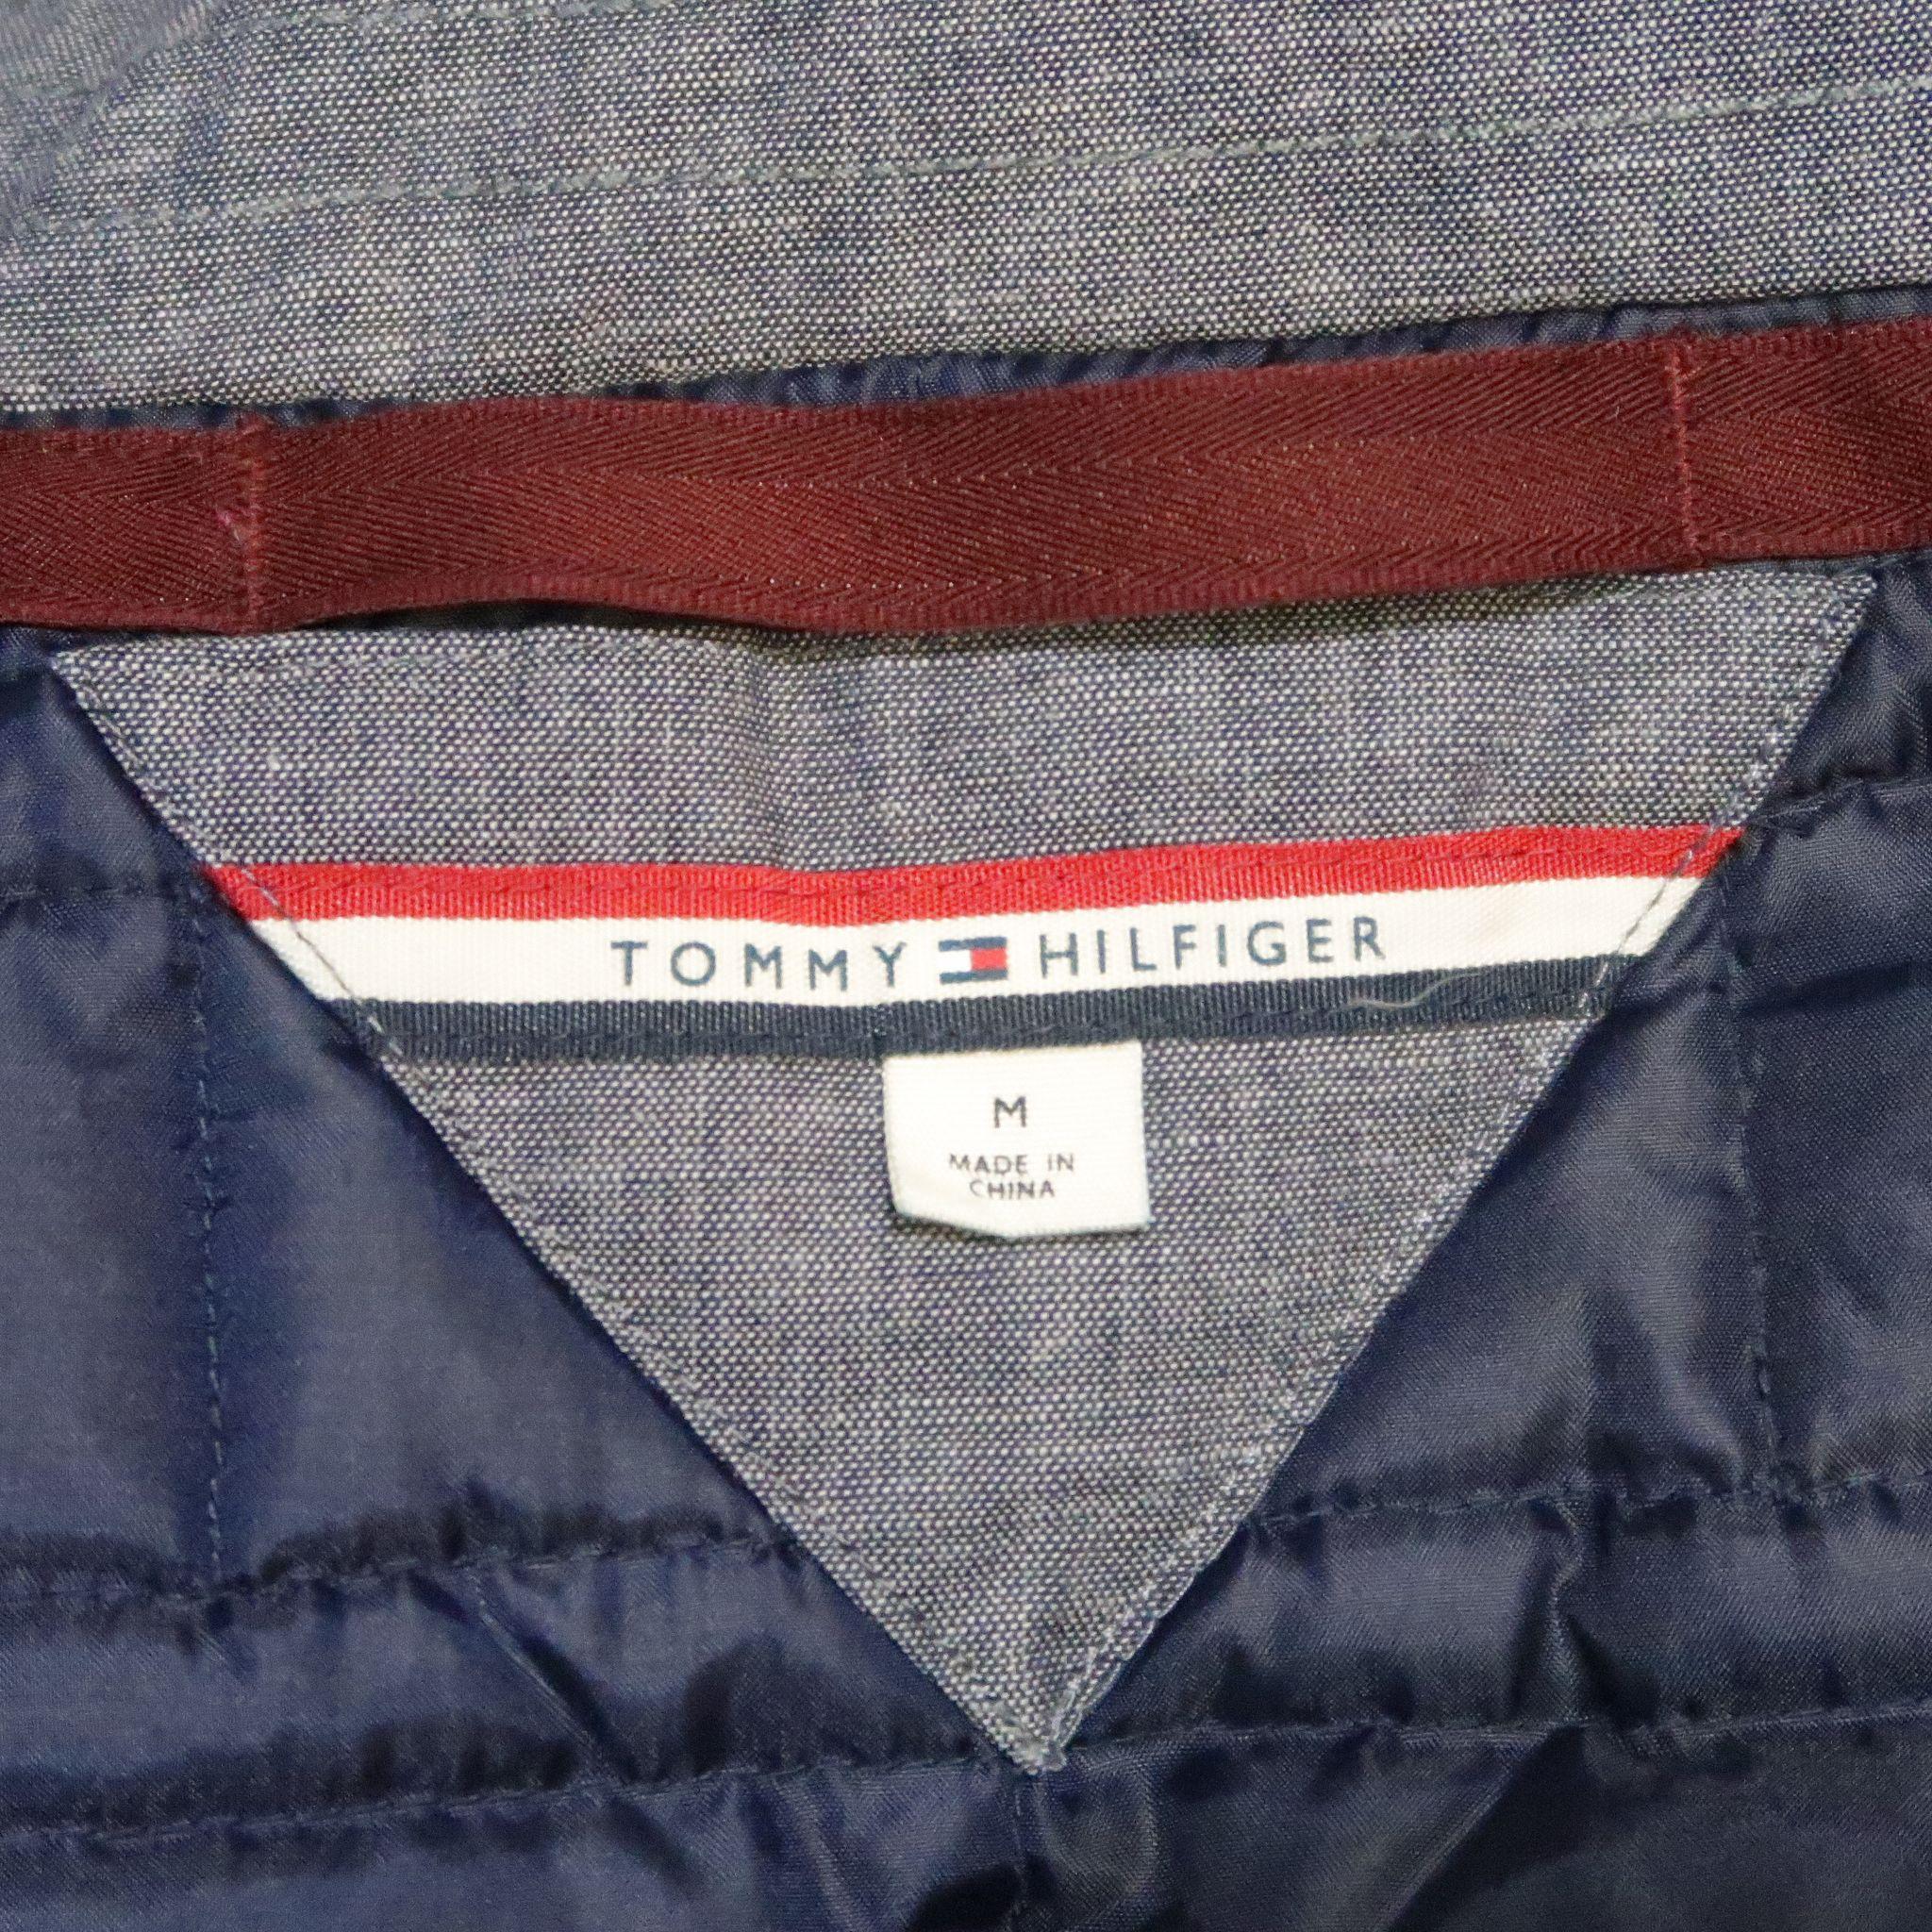 TOMMY HILFIGER M Blue Cotton / Linen Jacket 5